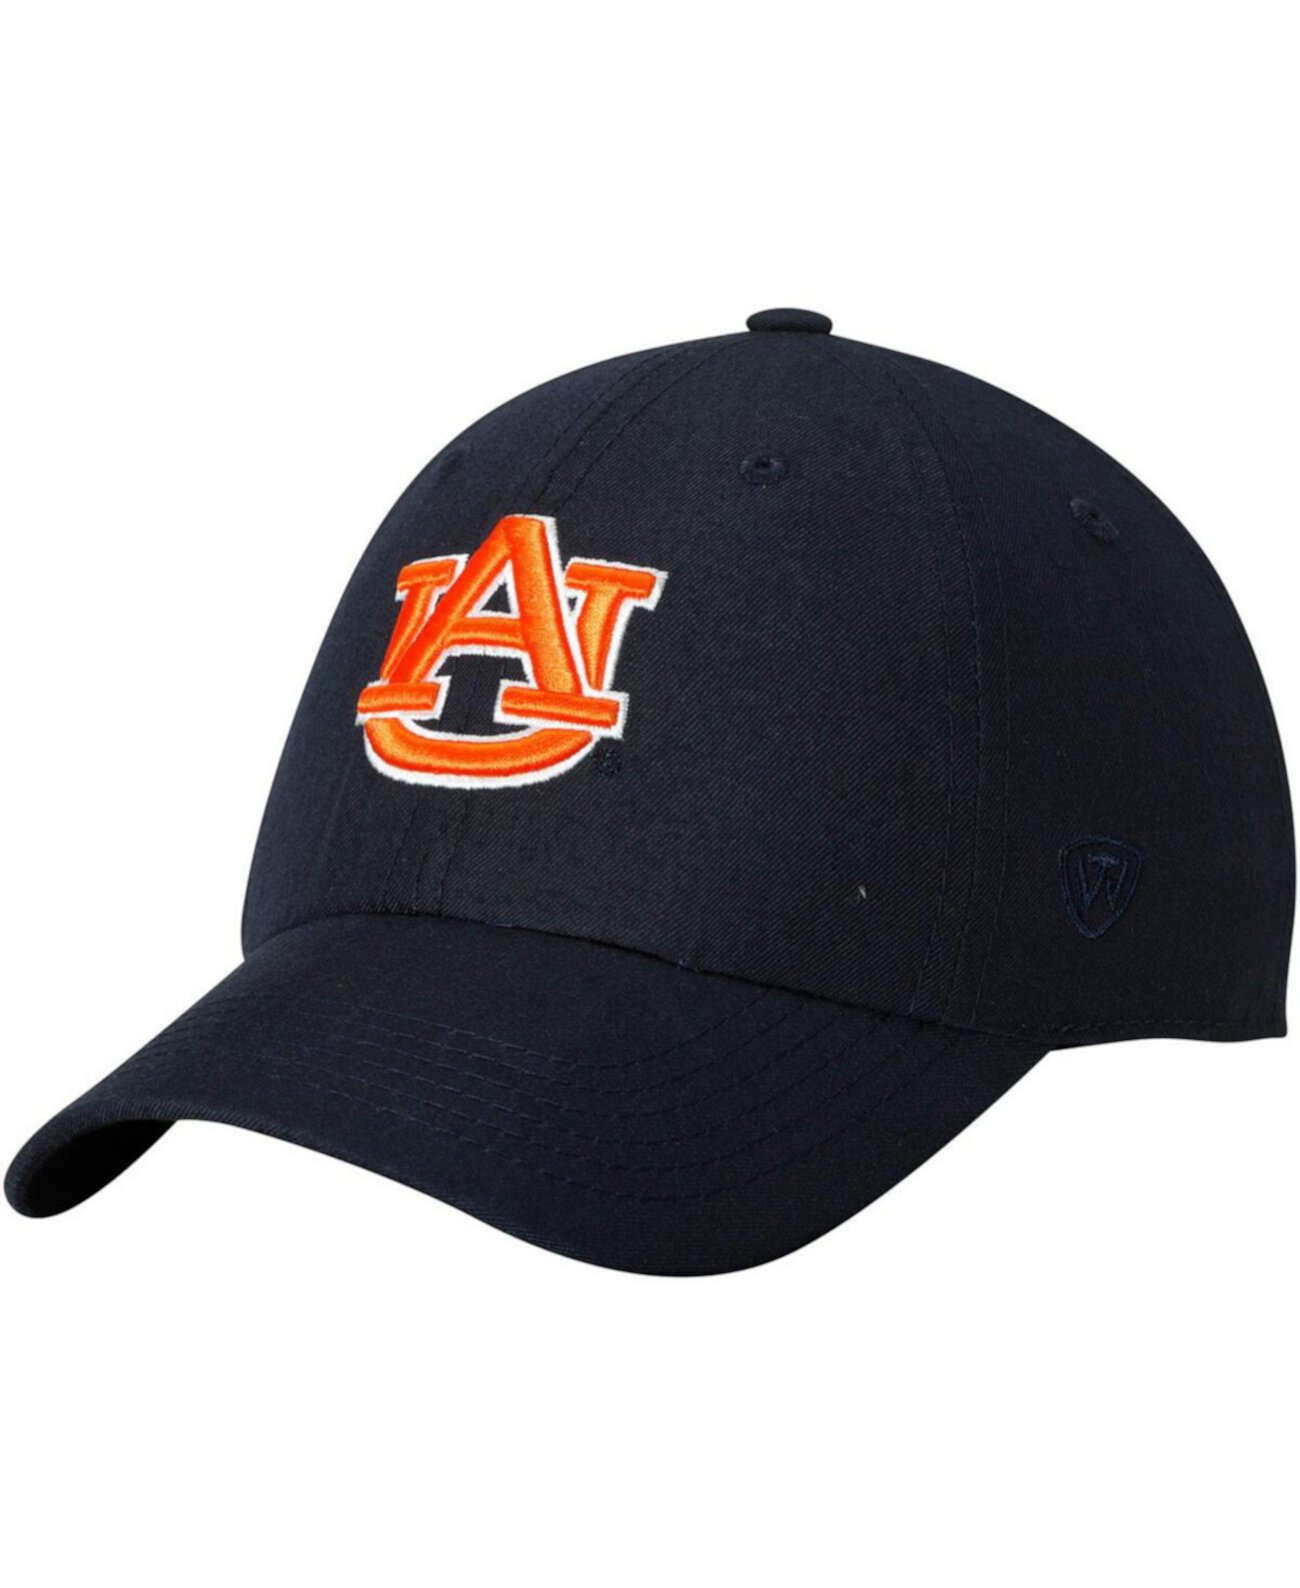 Мужская регулируемая шляпа темно-синего цвета с логотипом Auburn Tigers Primary Top of the World